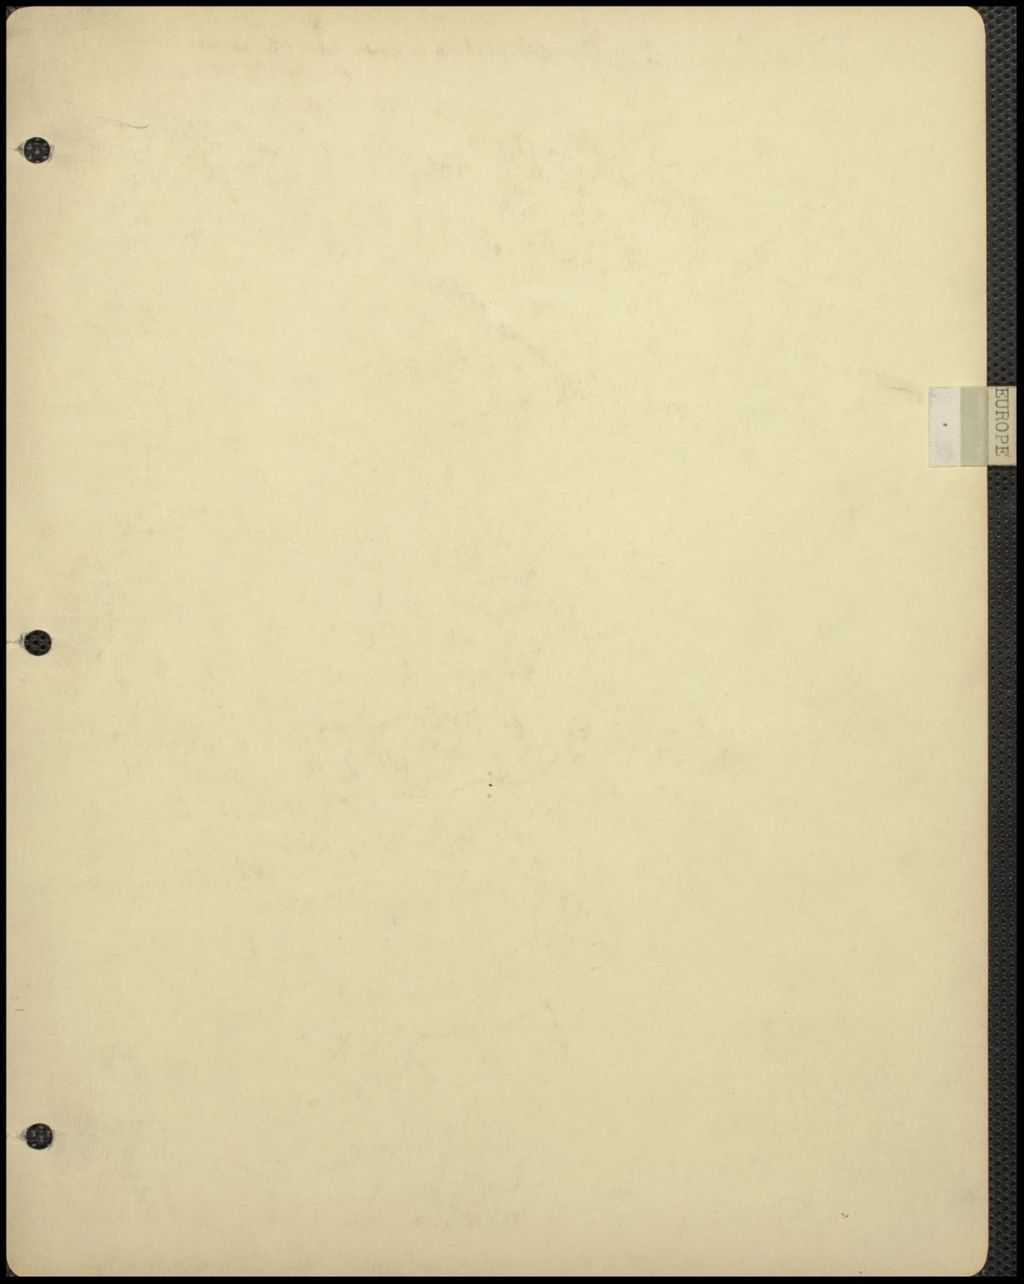 Foreign Participation, 1930 (Folder 11-123)